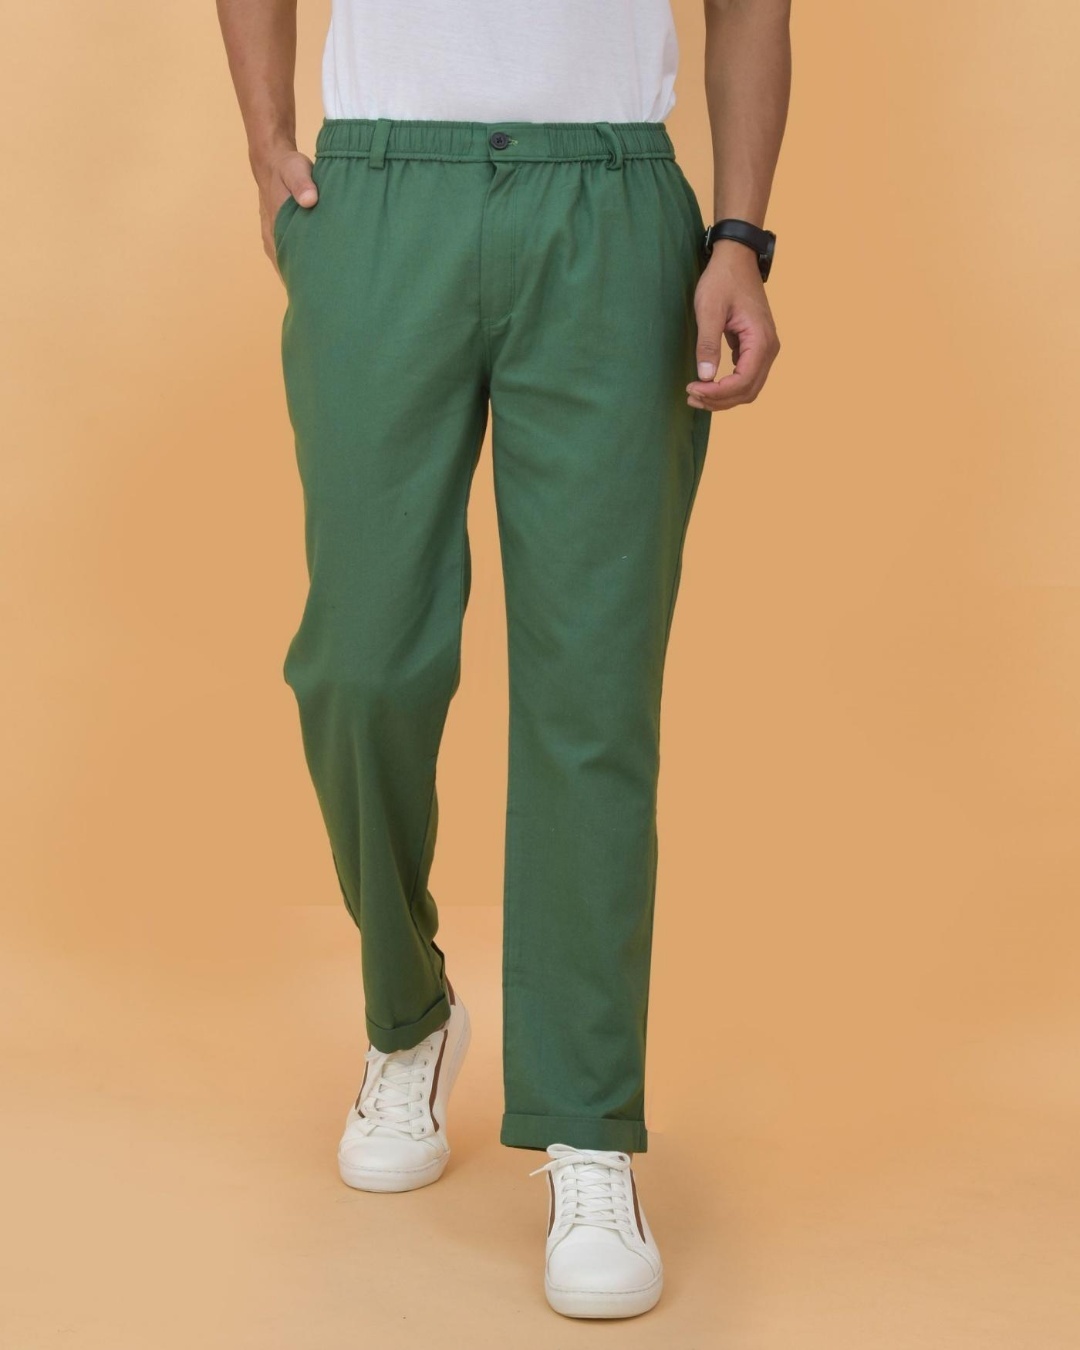 Bottle Green Corduroy Trousers | Green trousers, Corduroy, Trousers